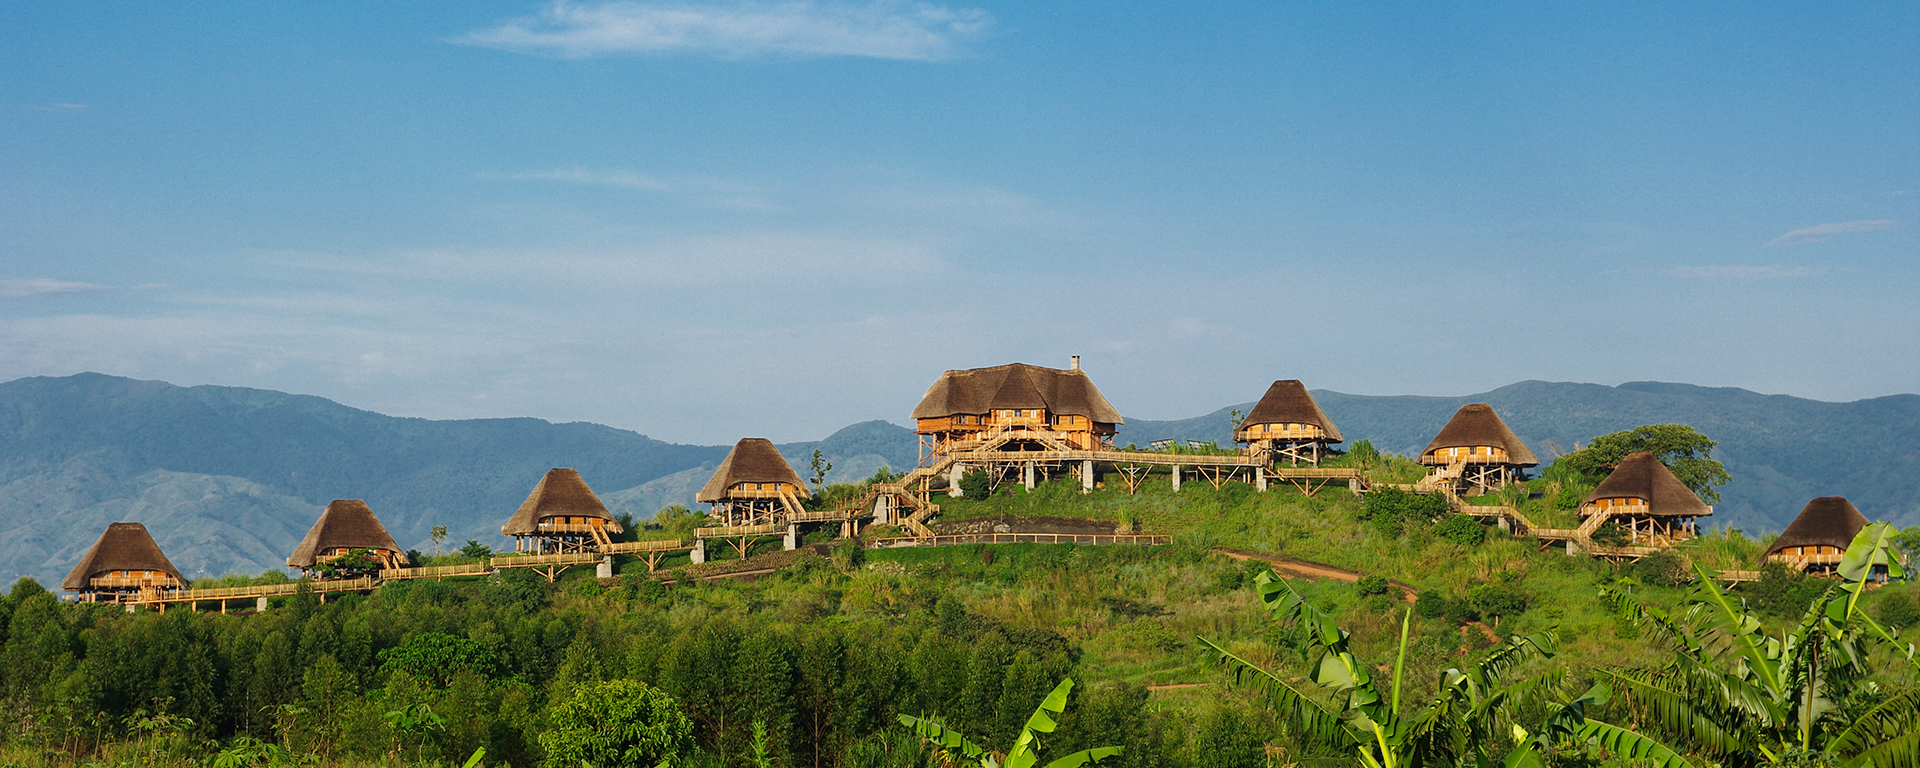 uganda_accommodation_kayaninga-lodge161